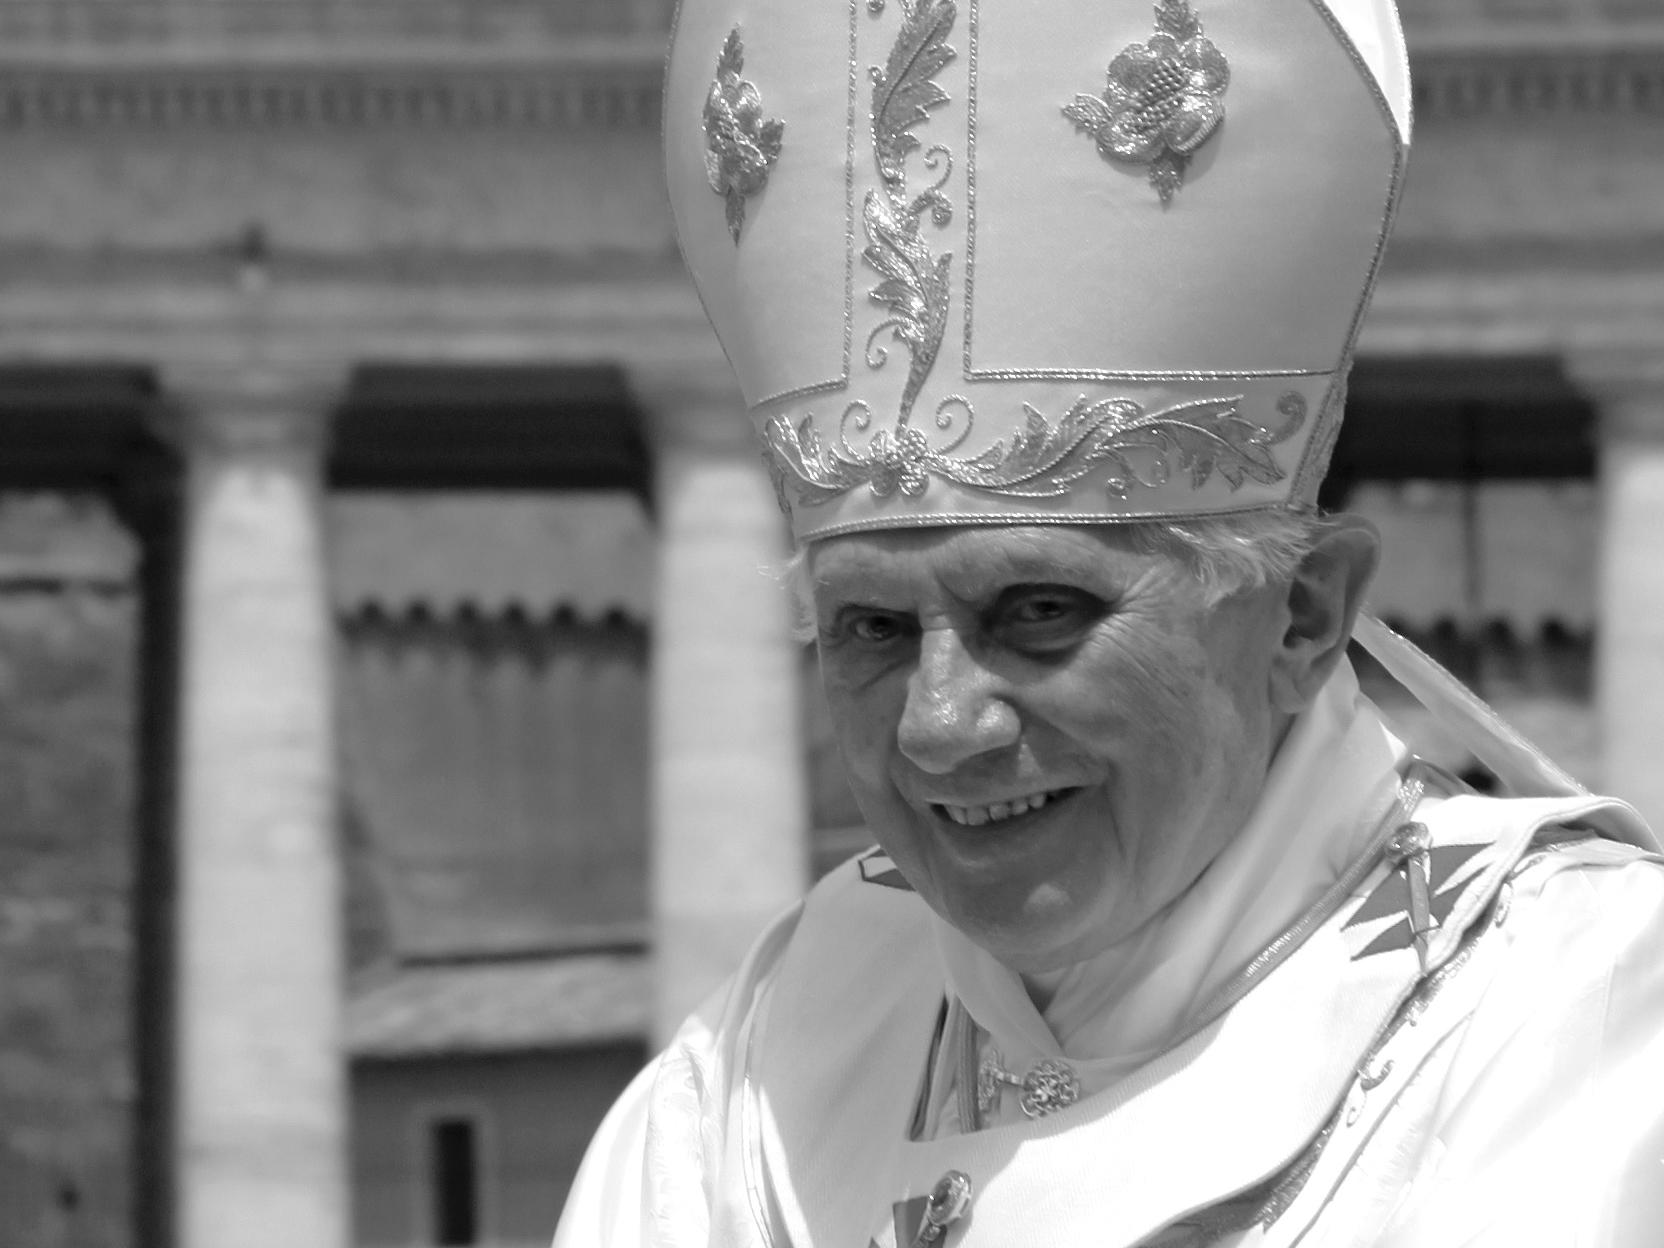 Papst em. Benedikt XVI.